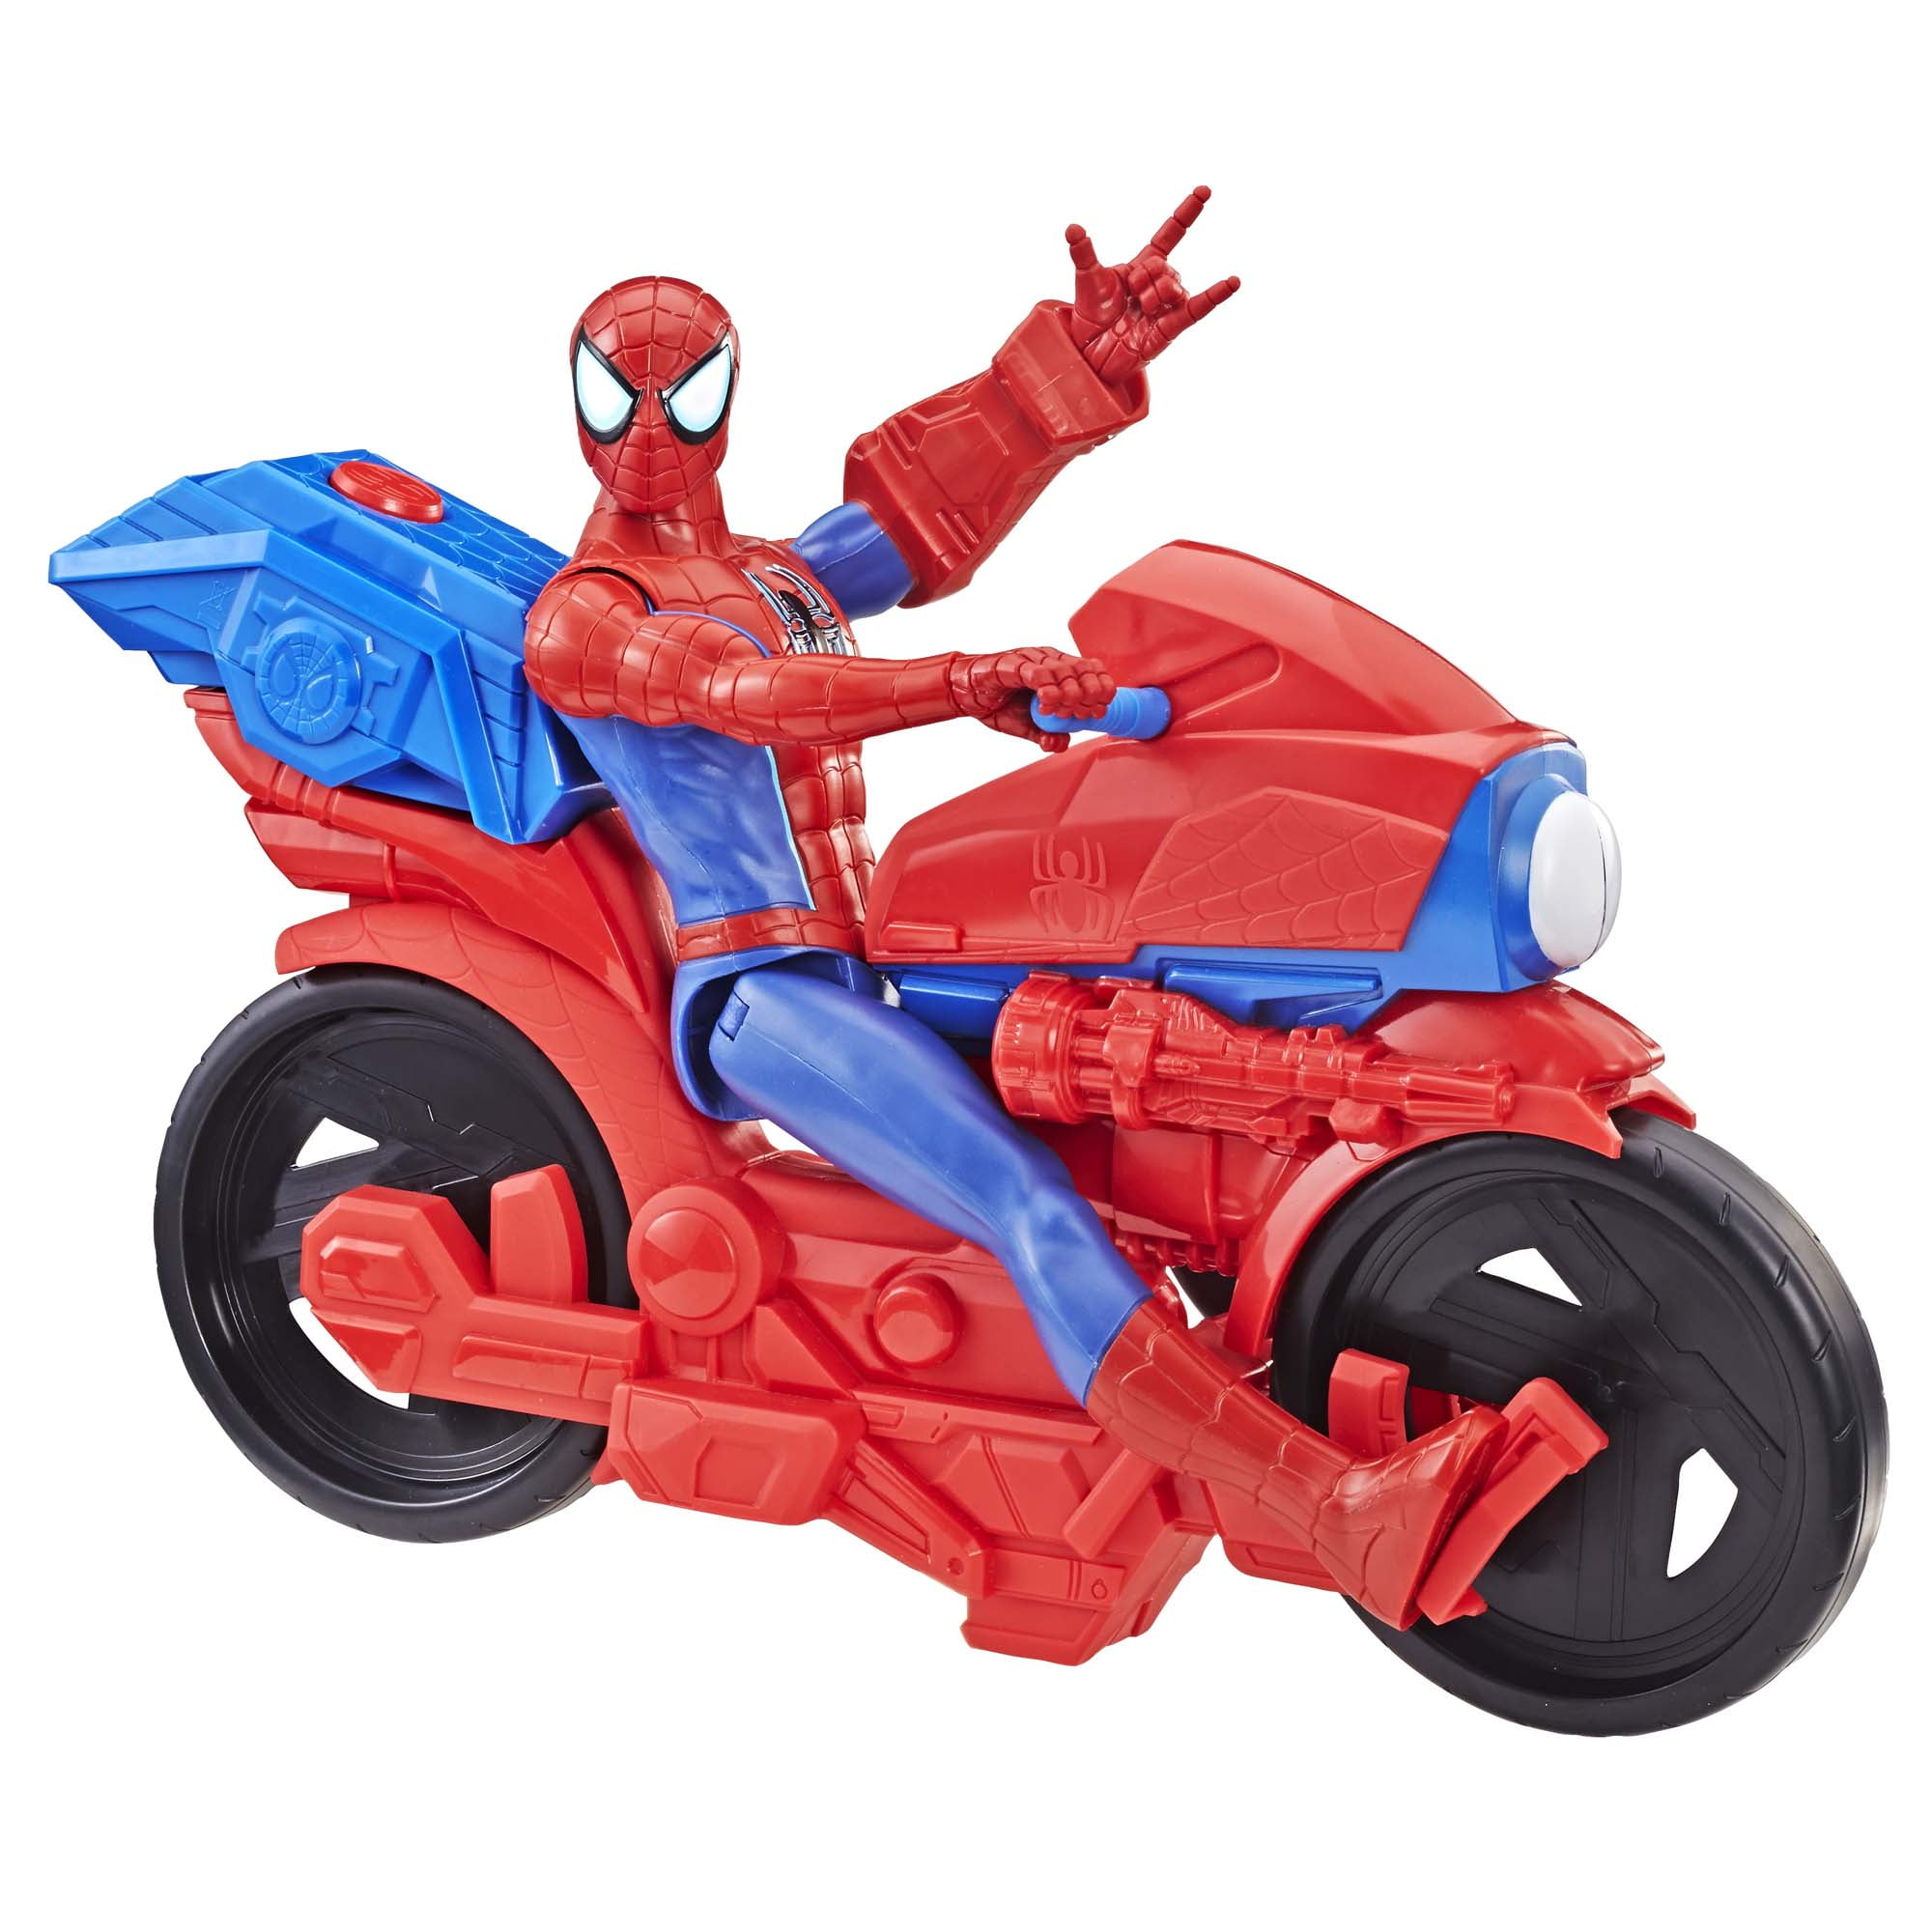 WALL charger AC adapter 8F4 KT1506WM KIDTRAX Marvel Spiderman Spiderbike ride on 